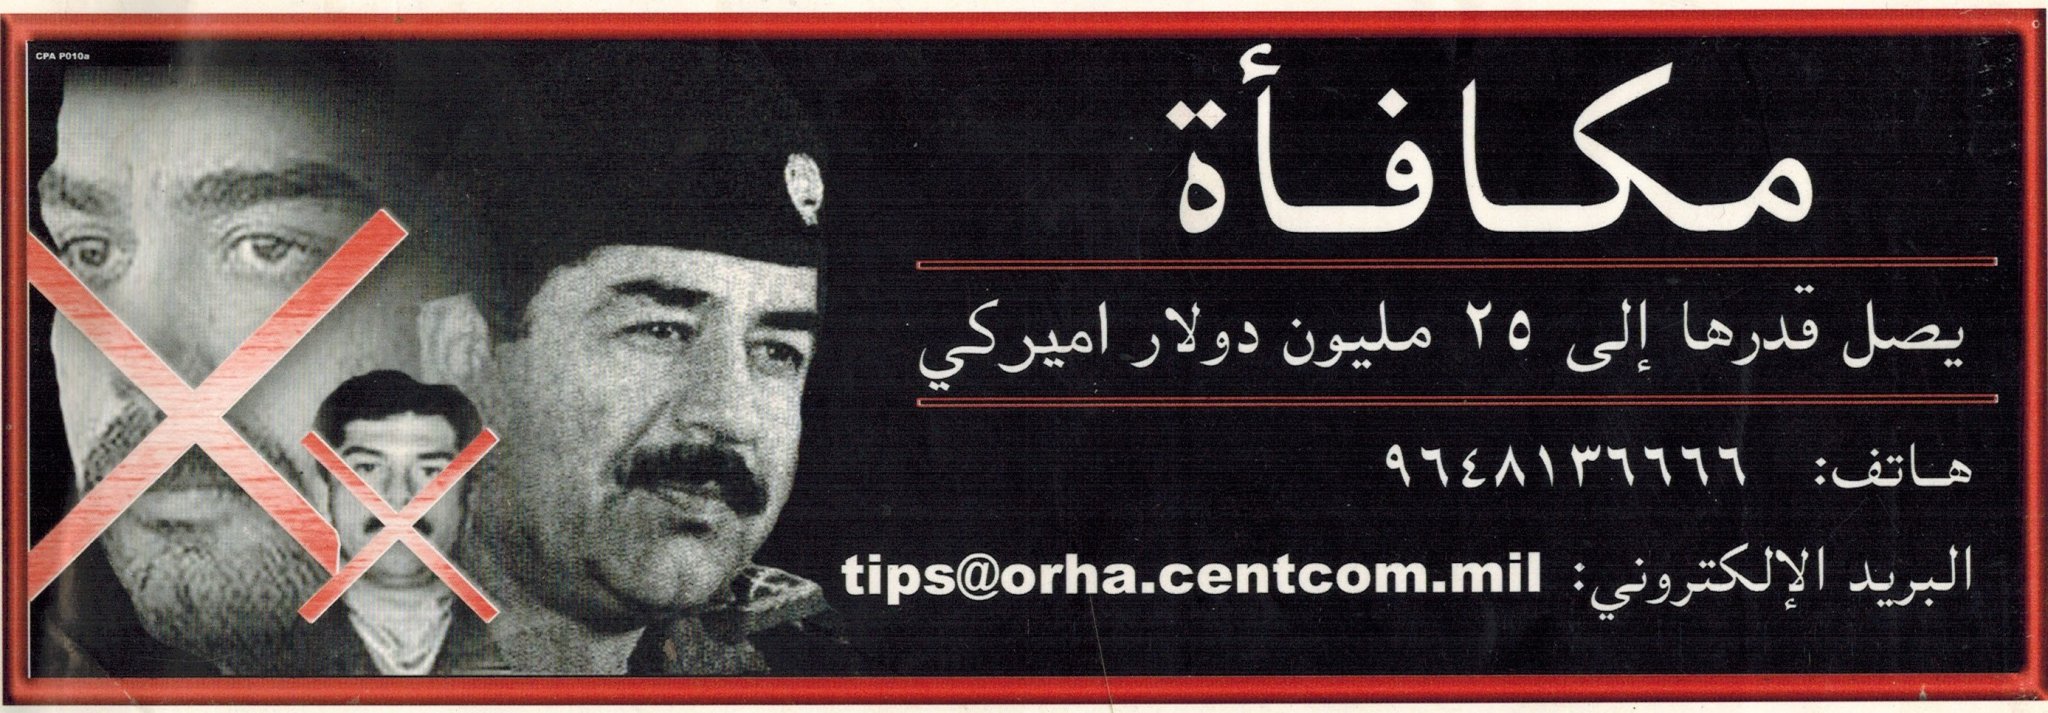 Saddam Hussein leaflet 2.jpg